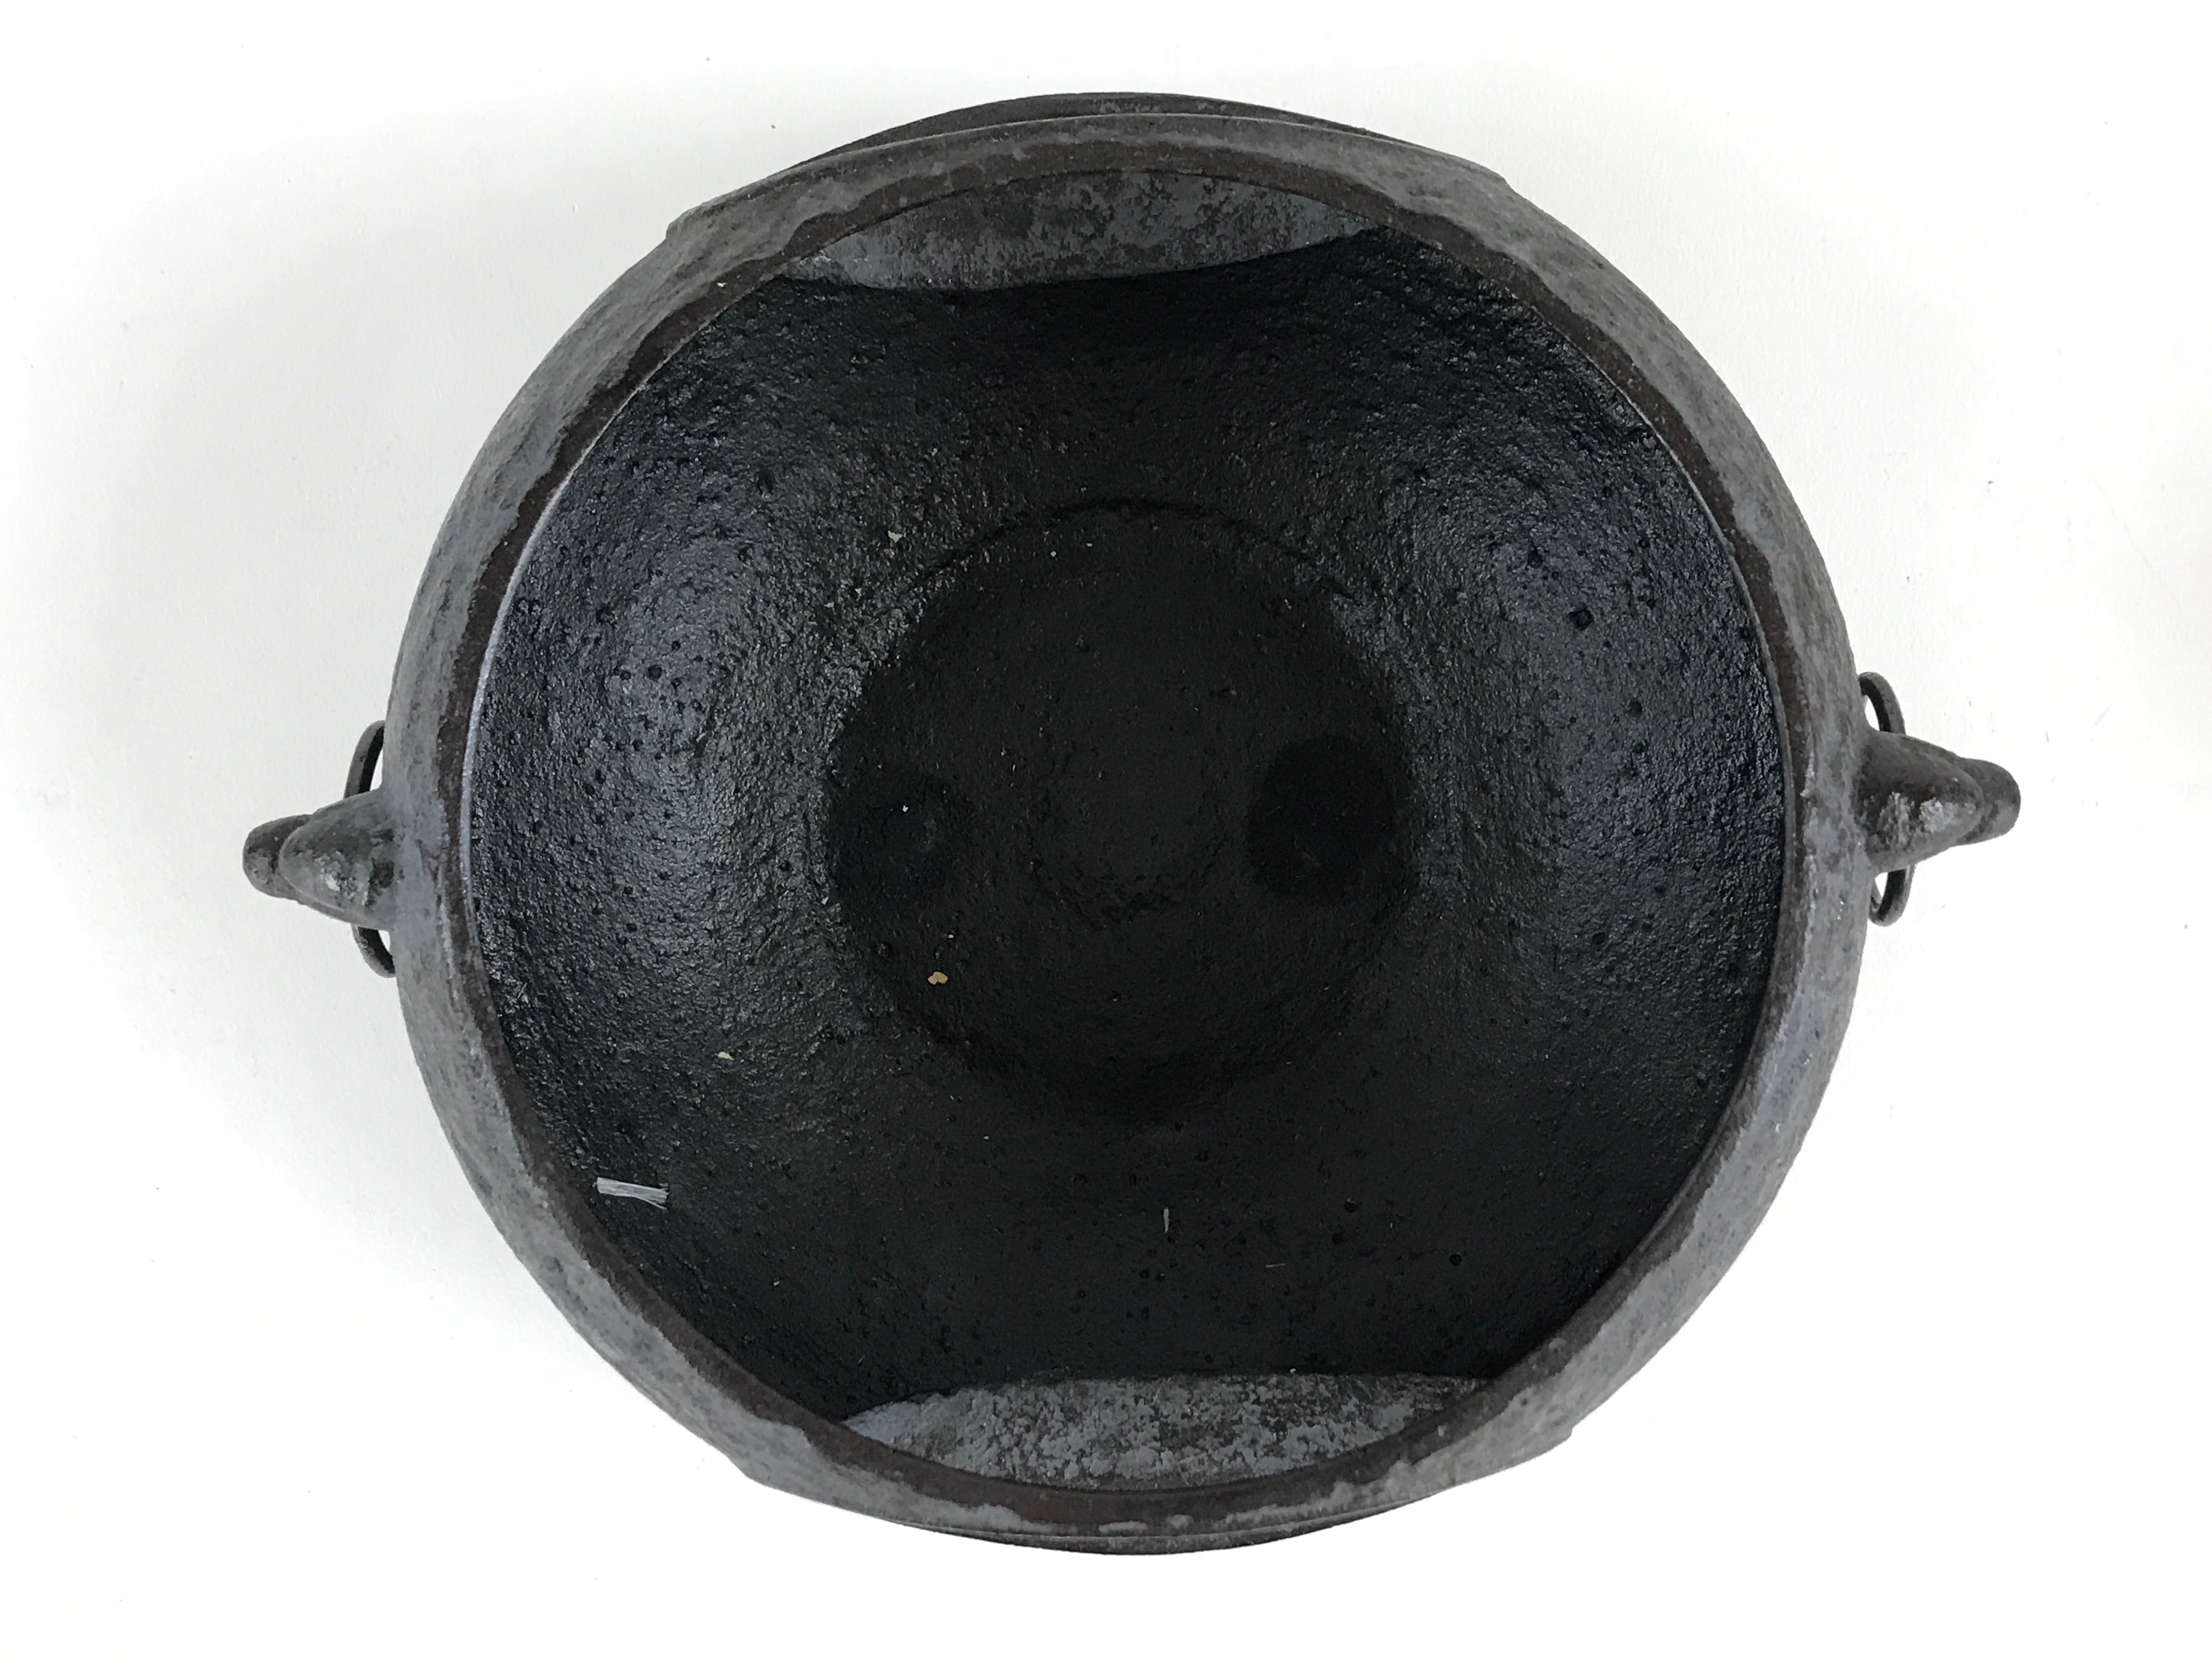 Japanese Electric Heater Iron Tea kettle Teapot Chagama Furo Charcoal, Online Shop